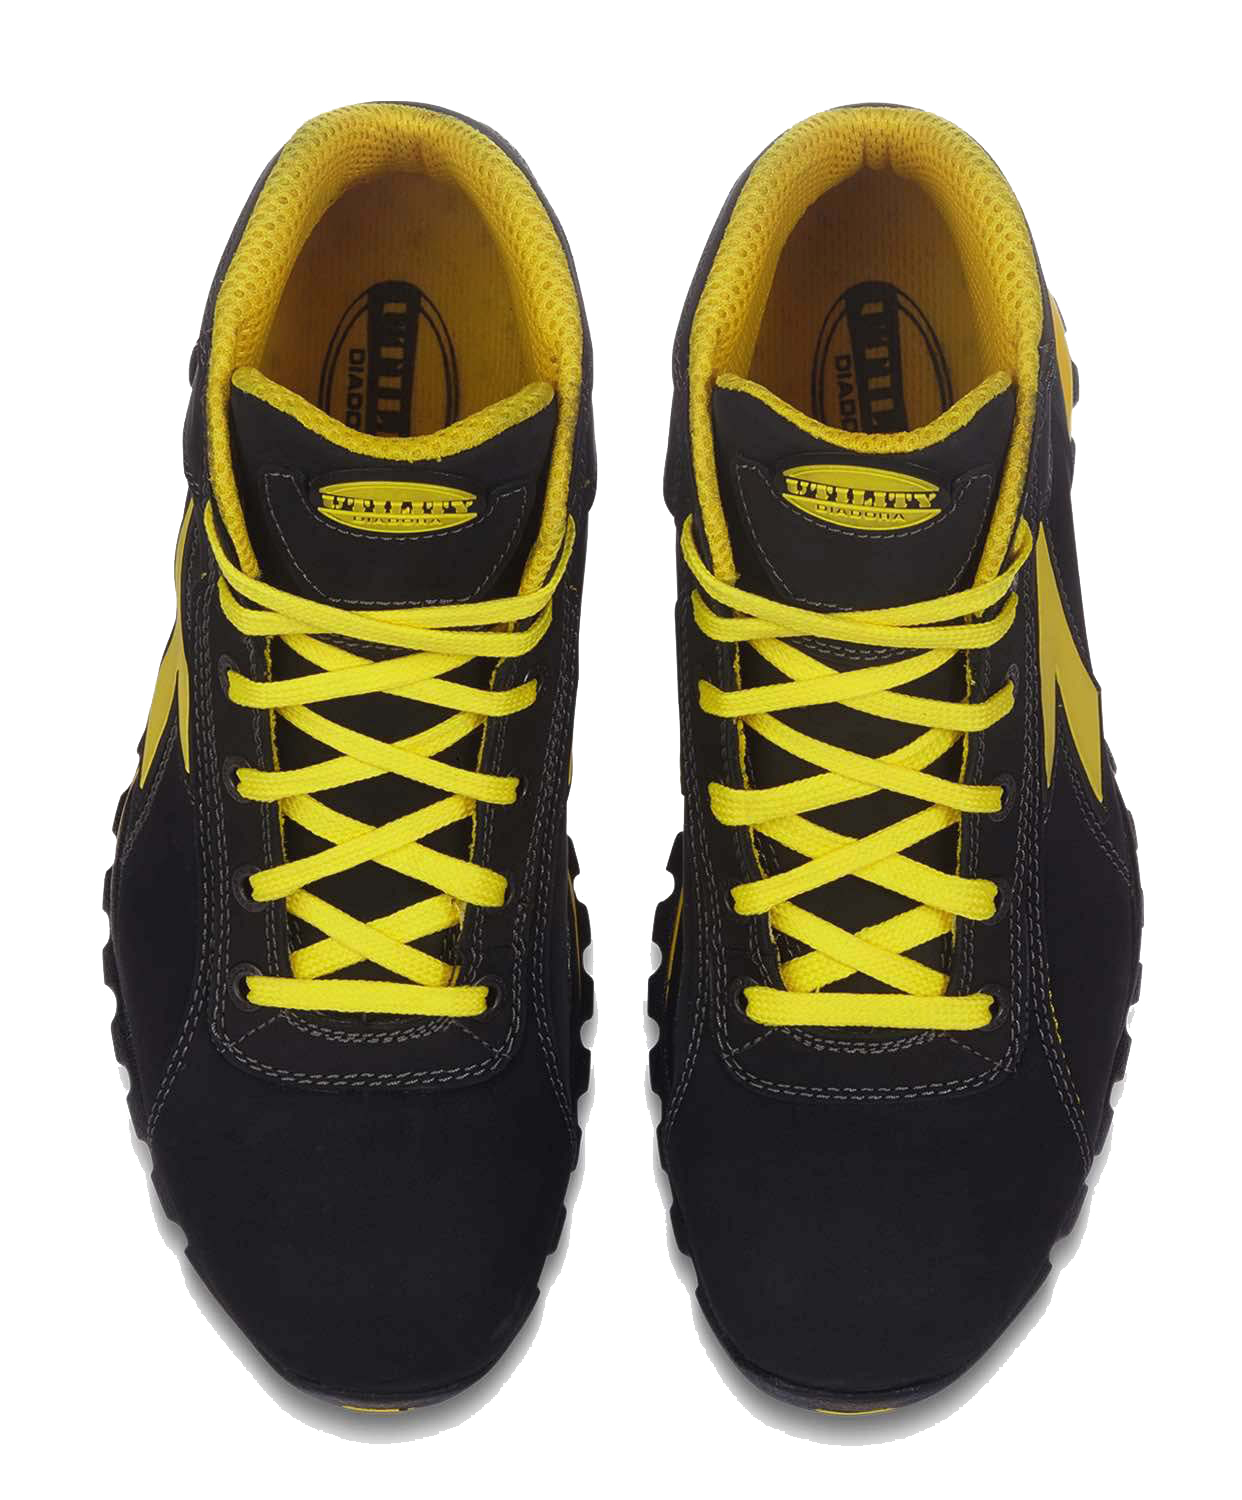 Chaussures de sécurité hautes GLOVE II HIGH S3 SRA HRO noir/jaune P39 - DIADORA SPA - 701.170234